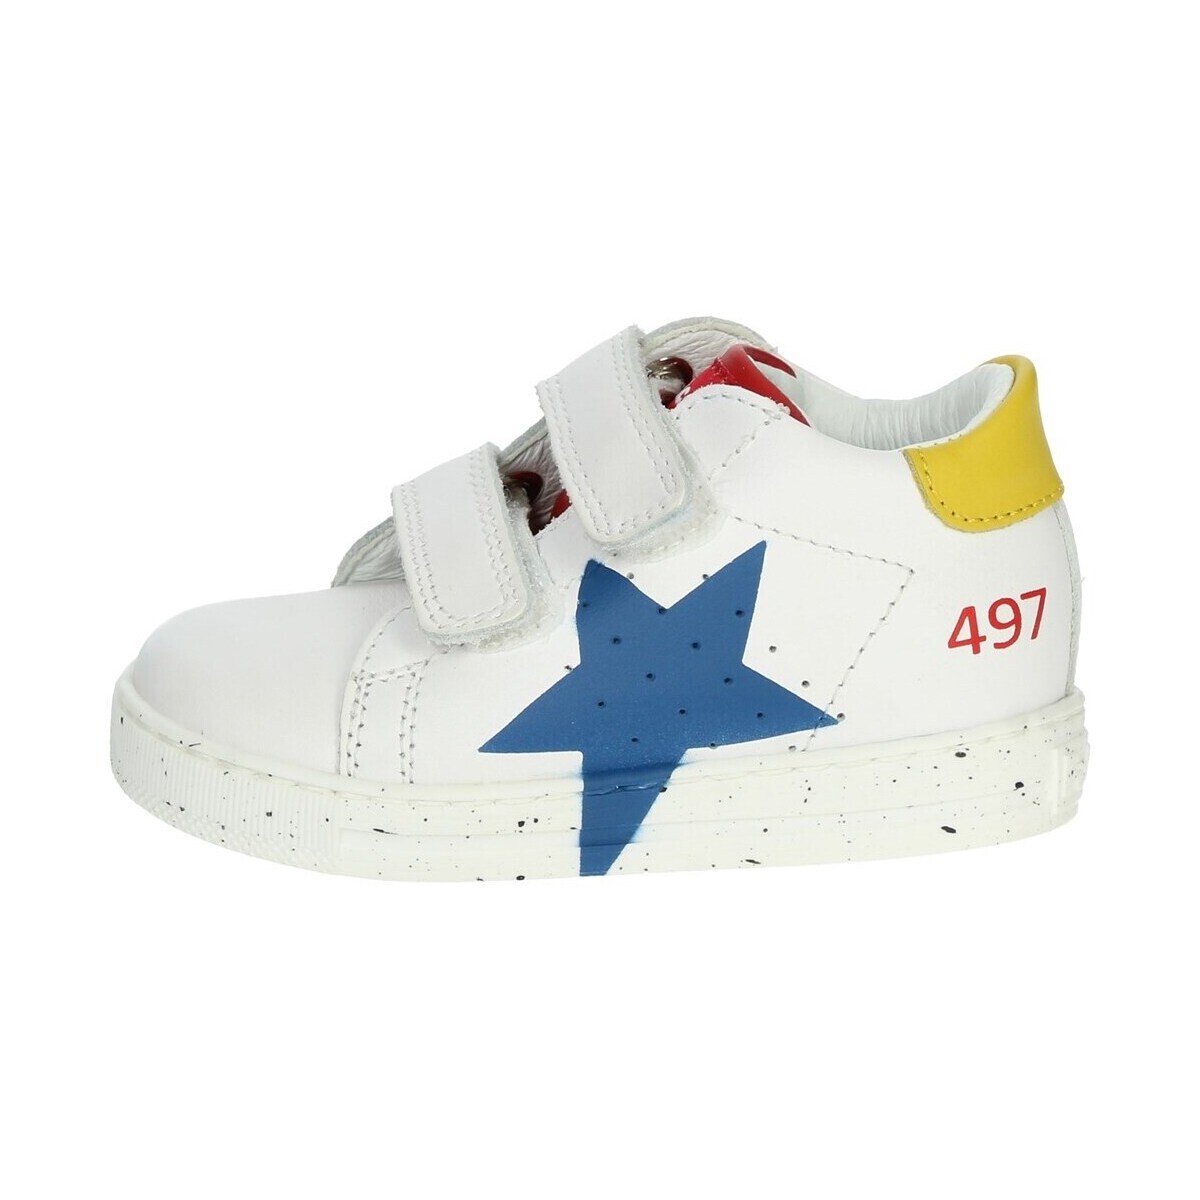 Schuhe Kinder Sneaker High Falcotto 0012015346.01.1N82 Weiss